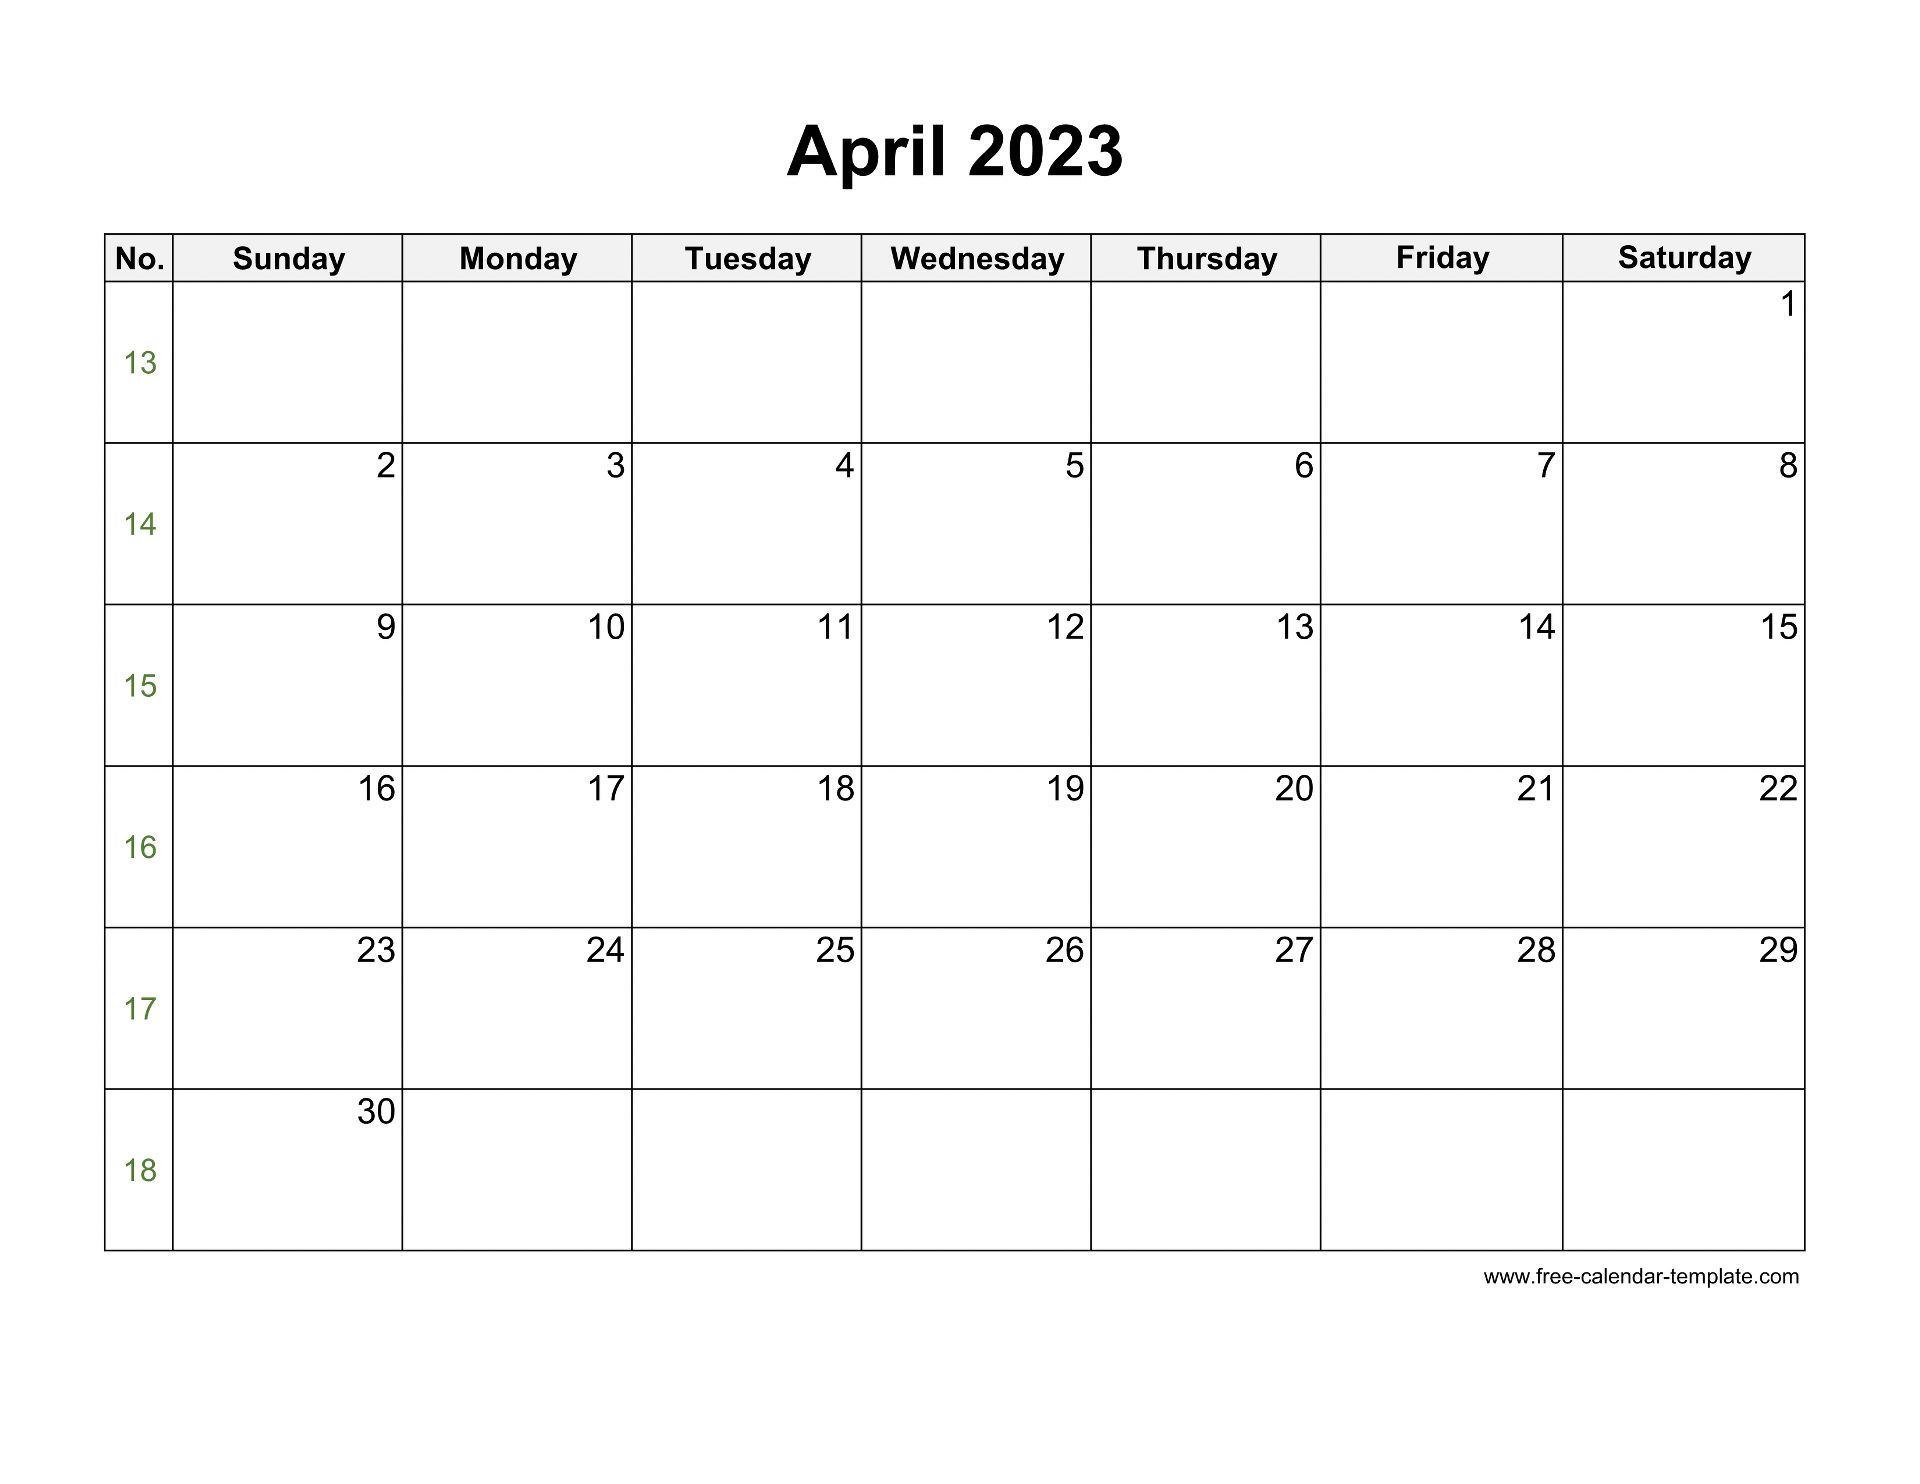 Free 2023 Calendar Blank April Template (horizontal) | Free-calendar ...